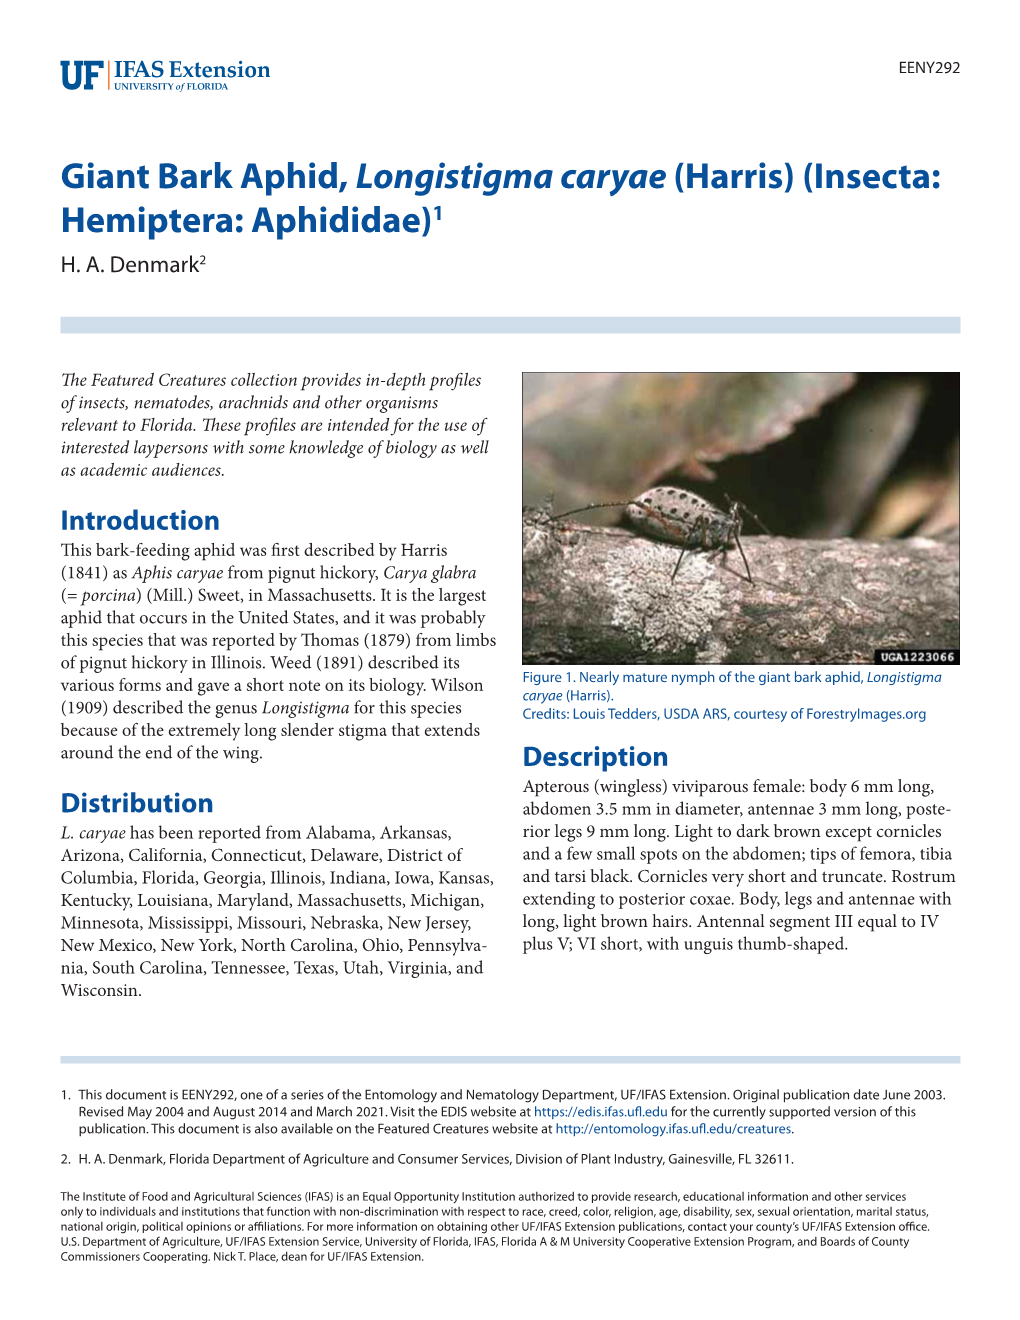 Giant Bark Aphid, Longistigma Caryae (Harris) (Insecta: Hemiptera: Aphididae)1 H